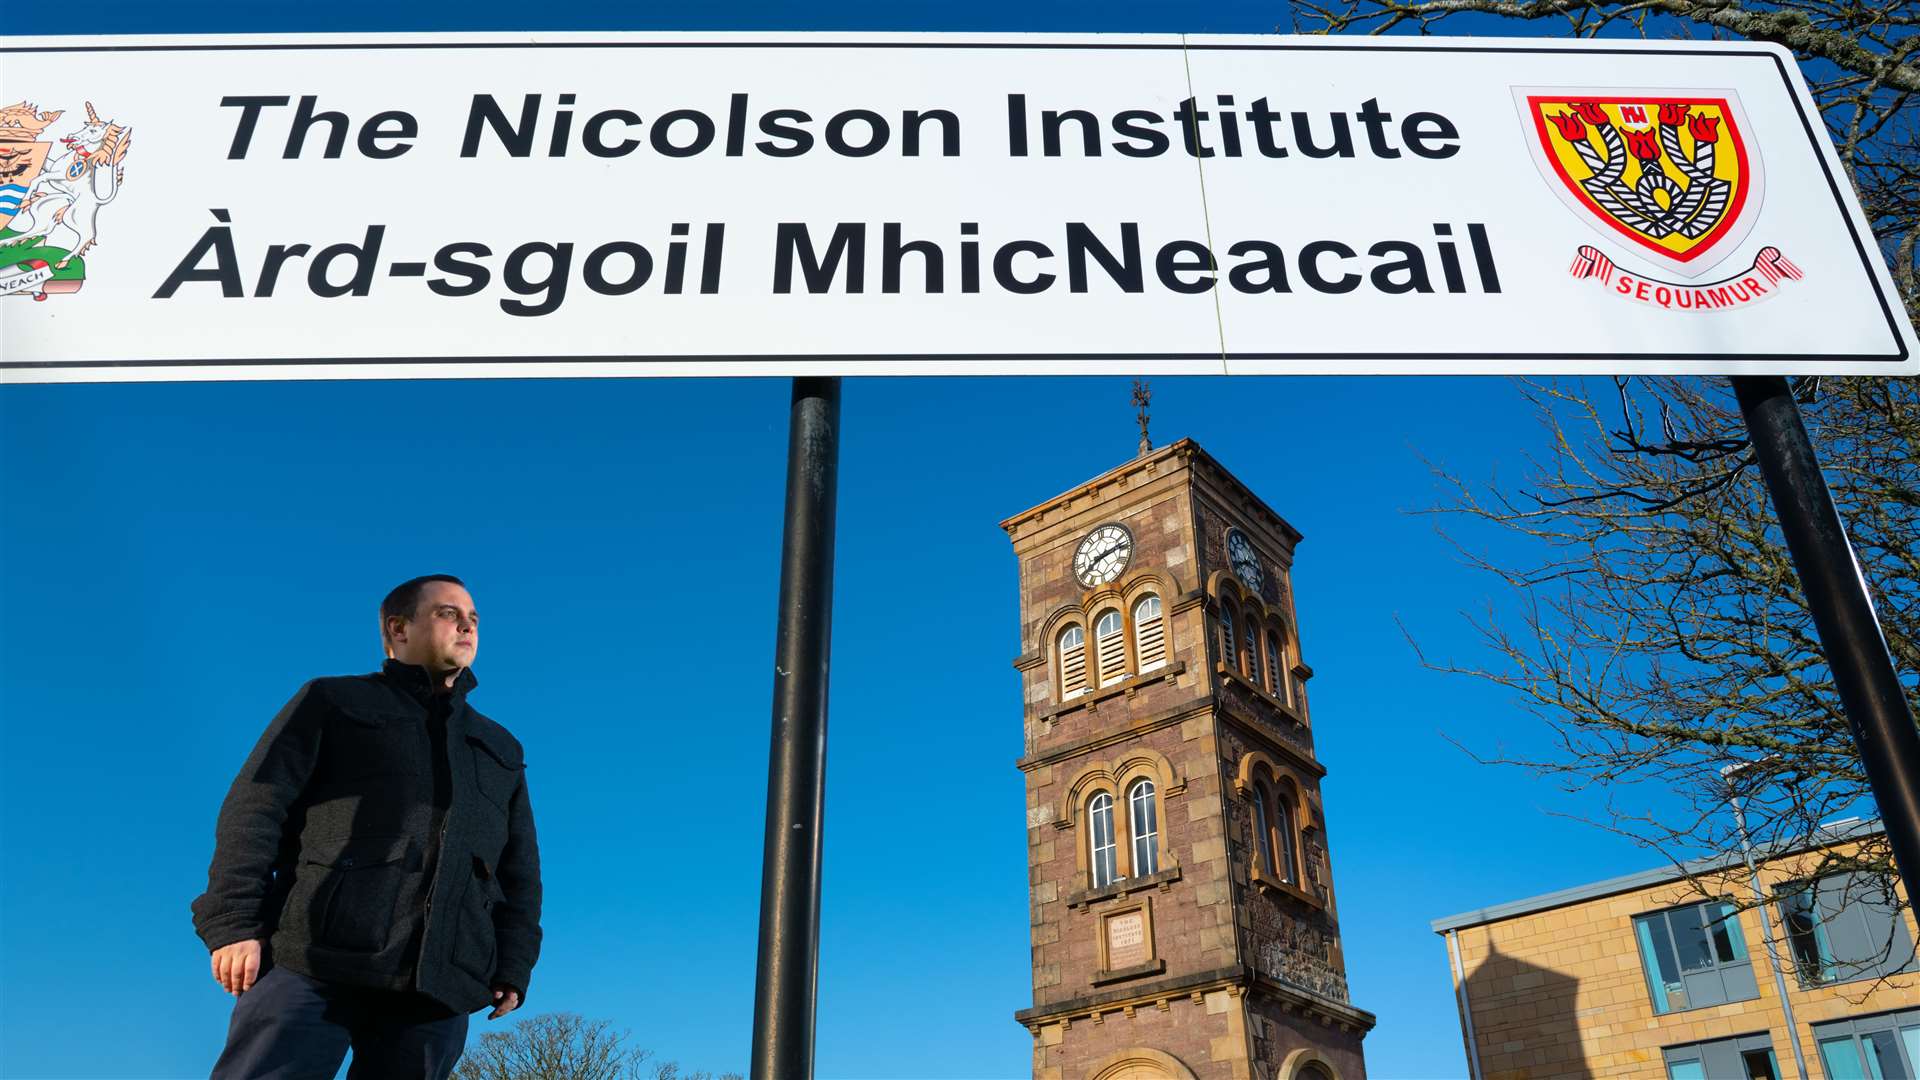 Ruairidh Maciver probes the history behind the Nicolson Institute.